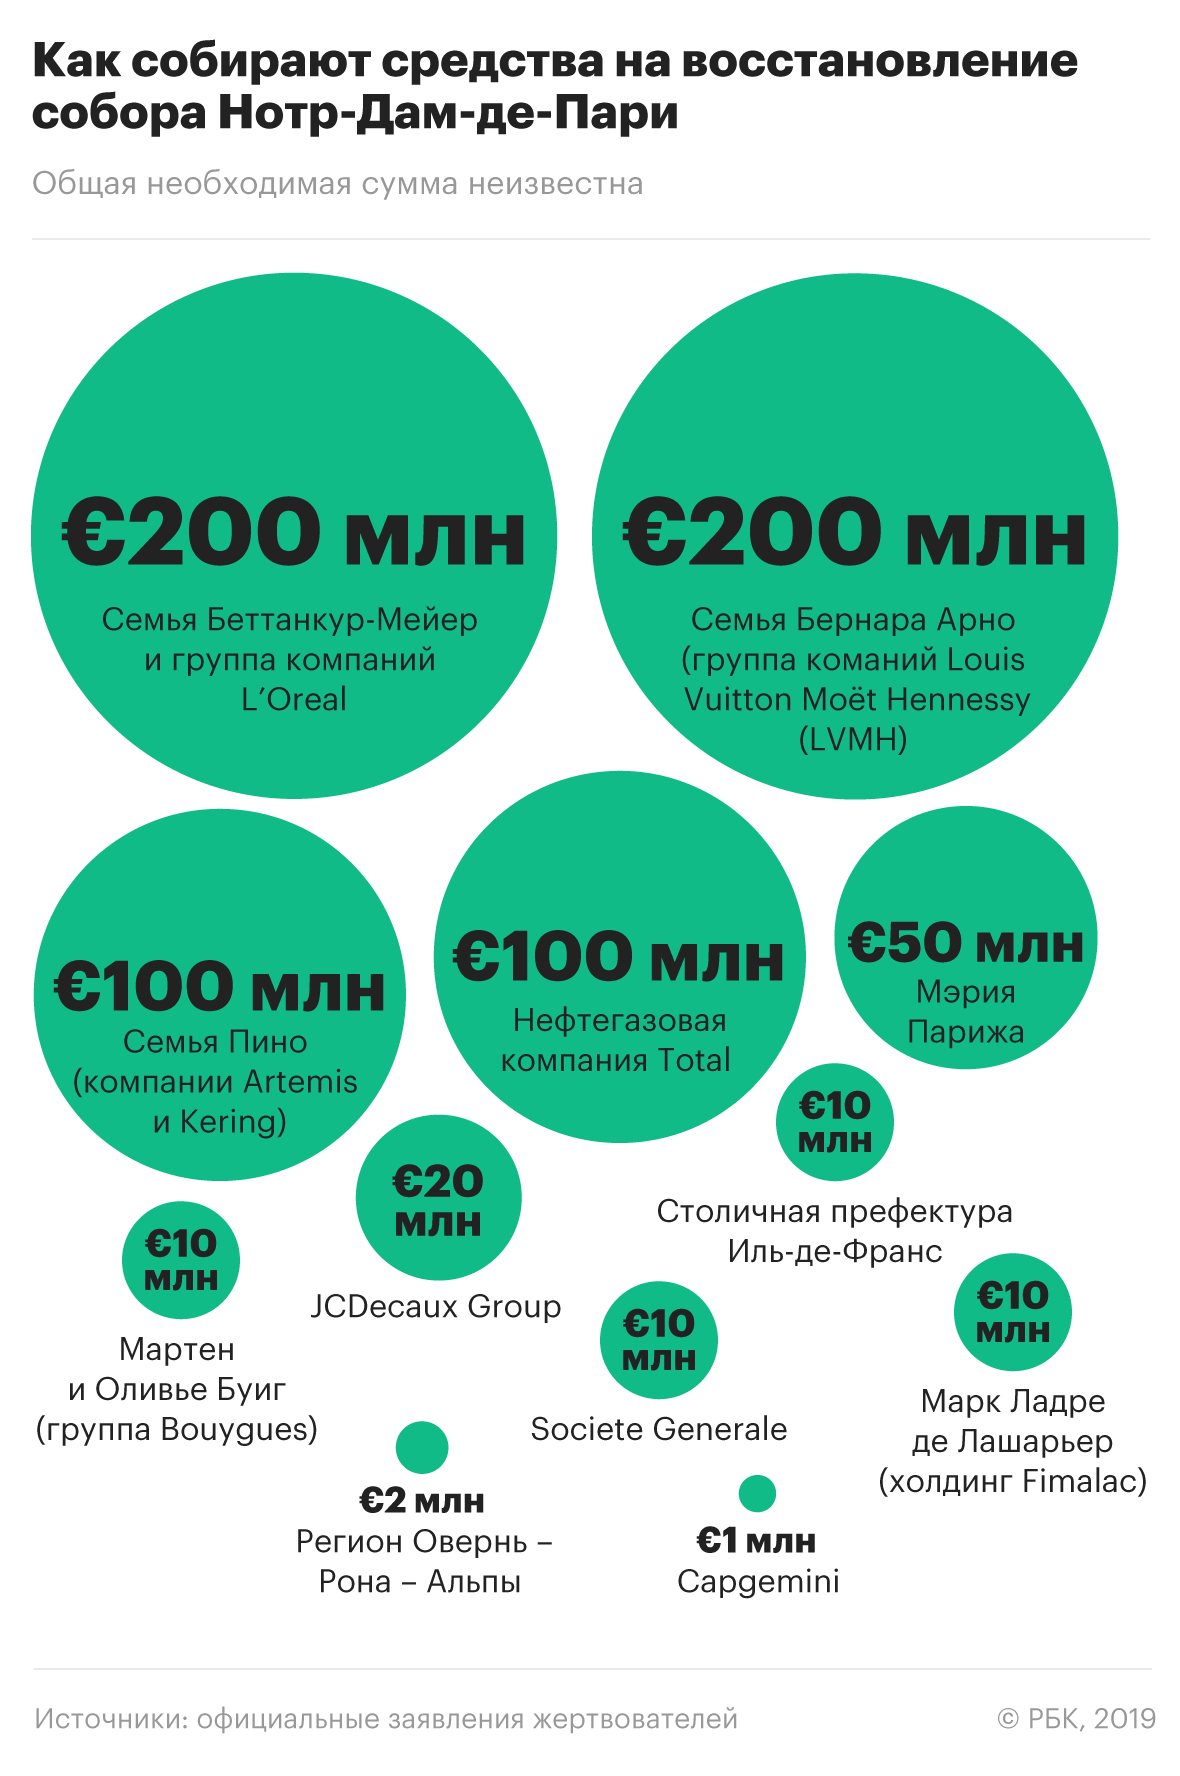 СМИ оценили пожертвования на восстановление Нотр-Дама в €1 млрд